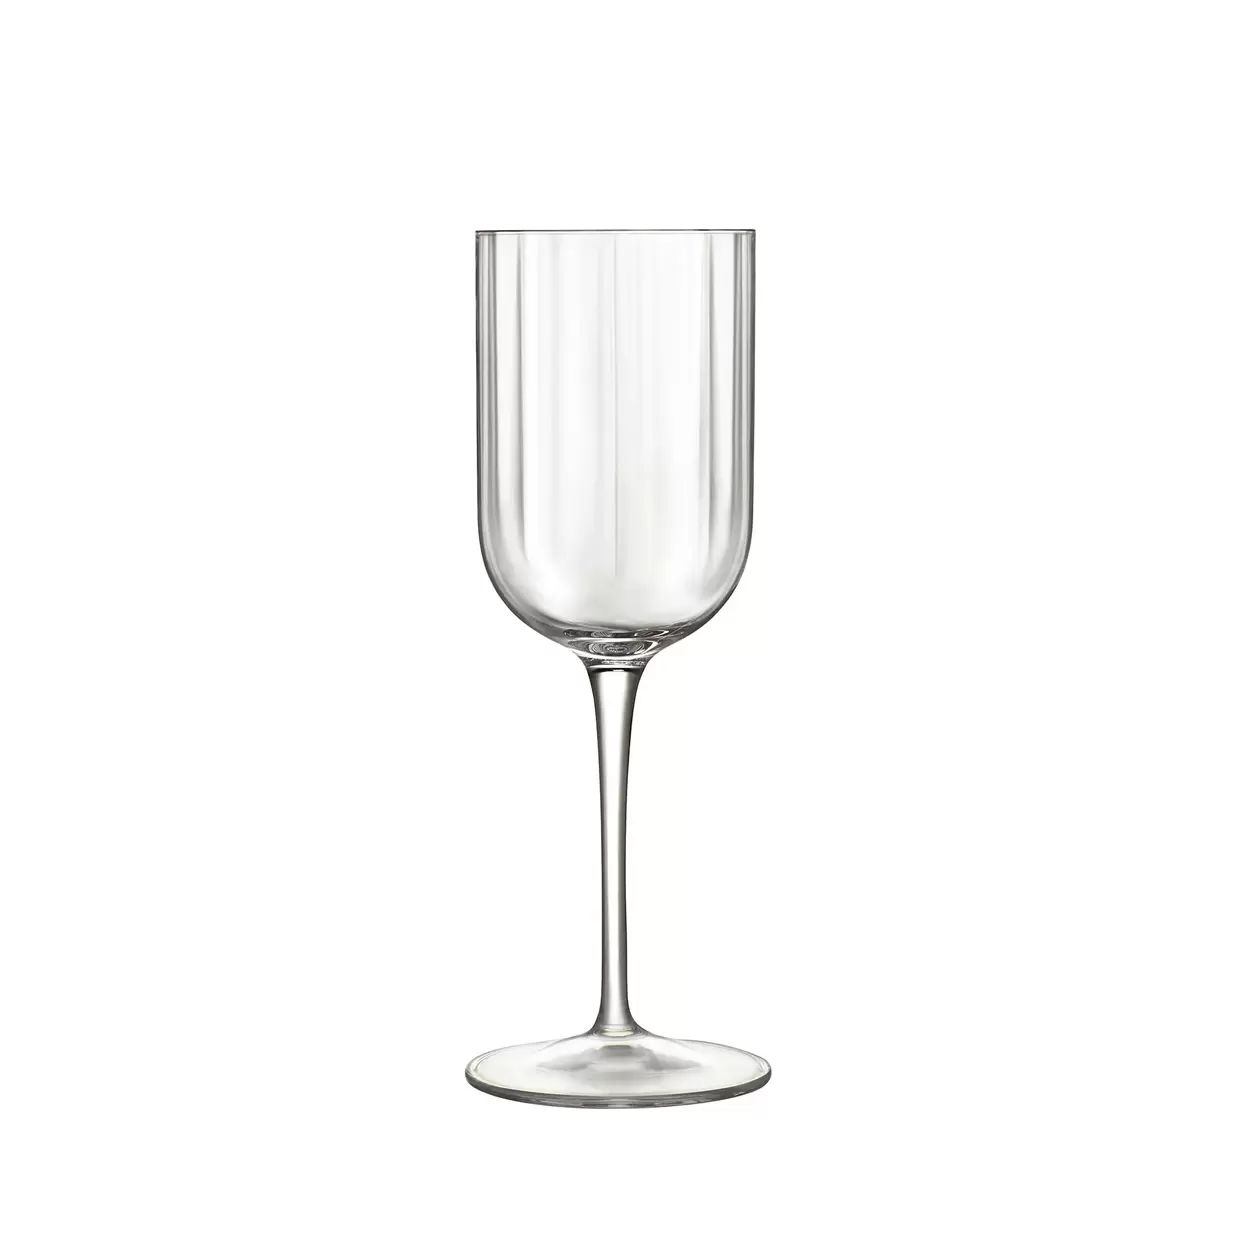 LUIGI BORMIOLI Jazz Negroni cocktailglas 4 stk på tilbud til 299,95 kr. hos Sinnerup